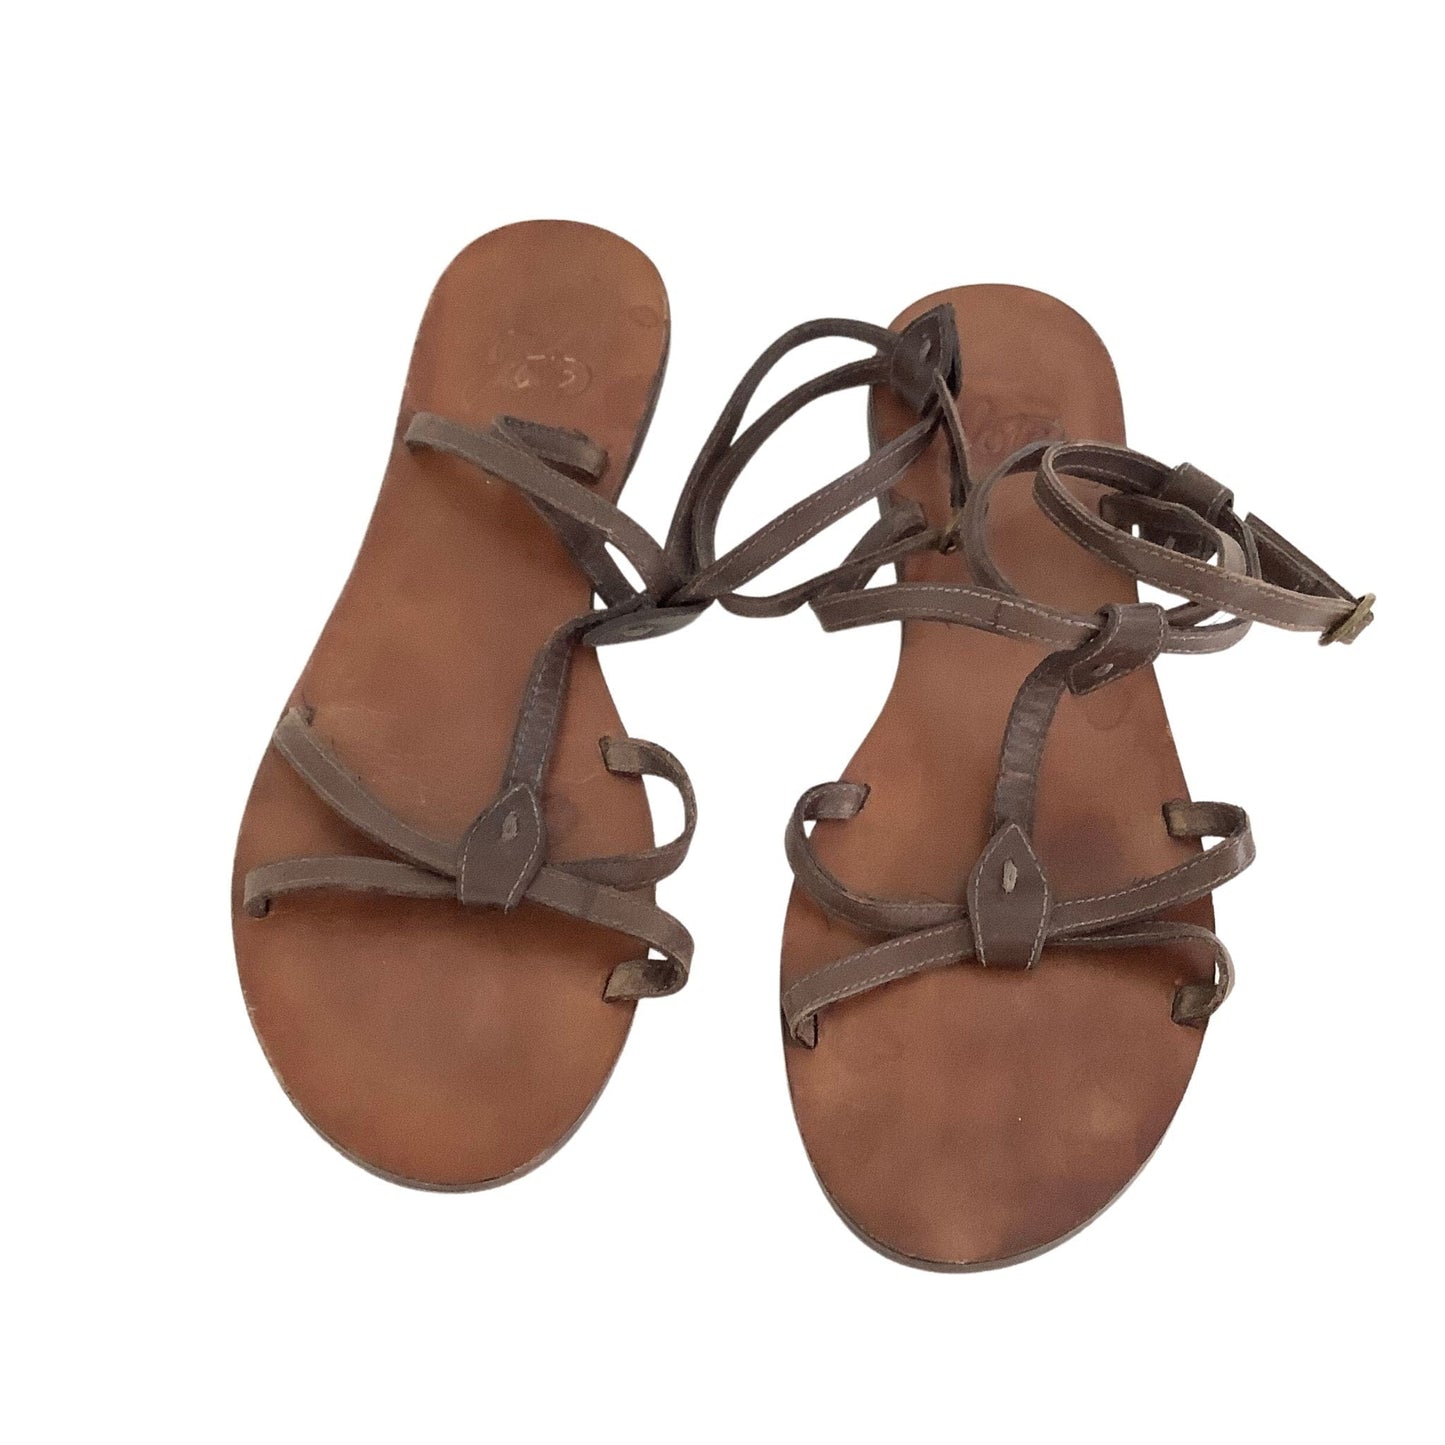 1970s Gladiator Flat Sandals 7 / Brown / Boho